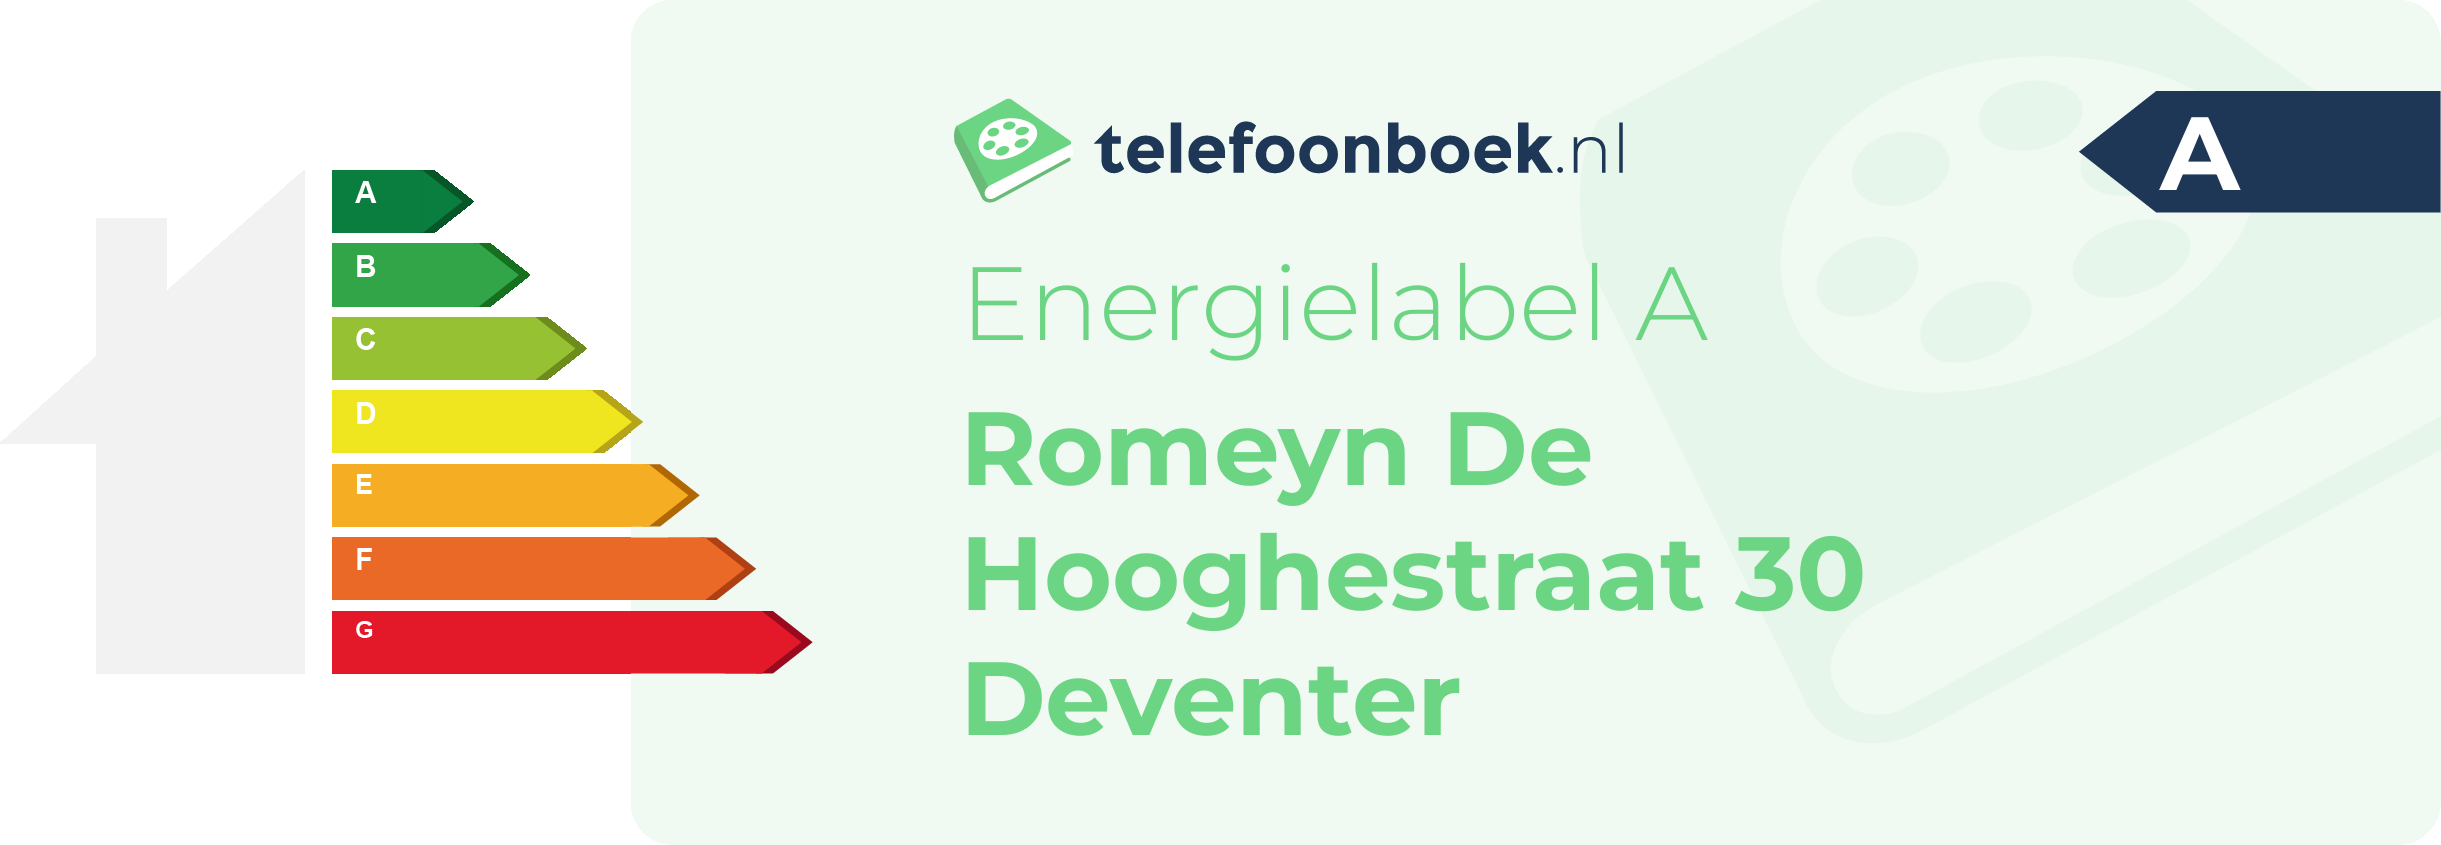 Energielabel Romeyn De Hooghestraat 30 Deventer